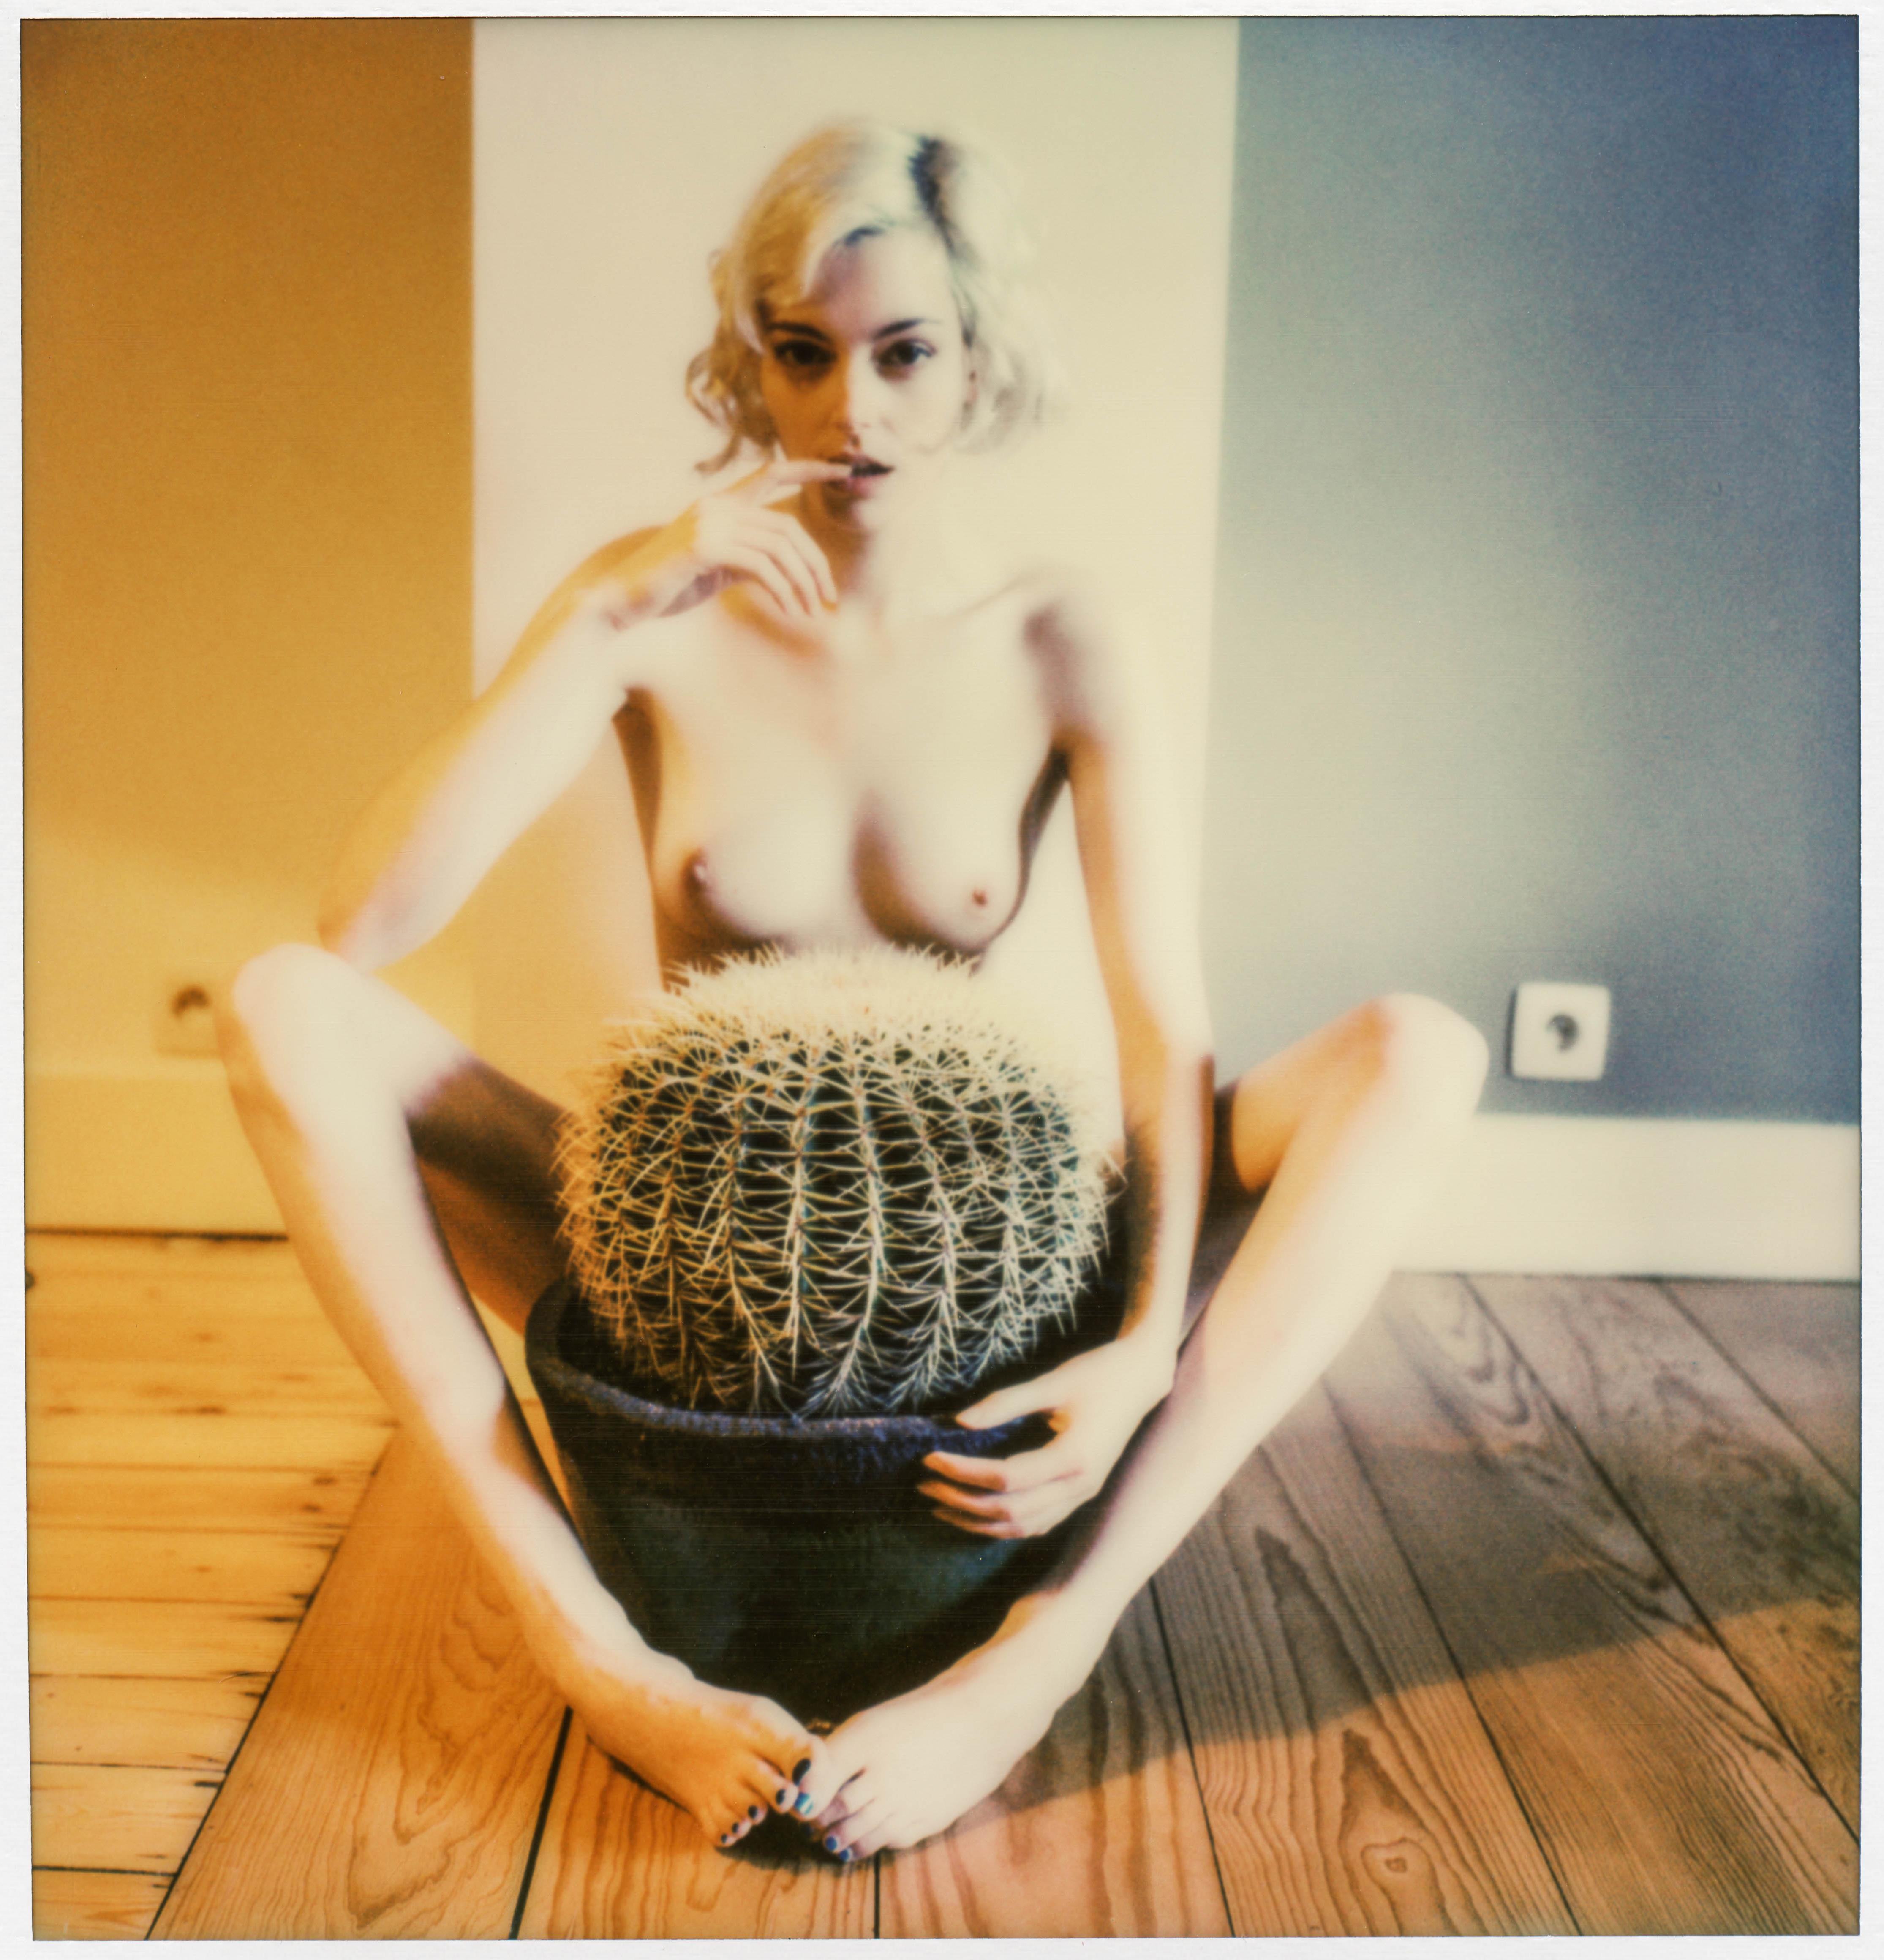 Spiked - Contemporary, Nude, Women, Polaroid, 21st Century